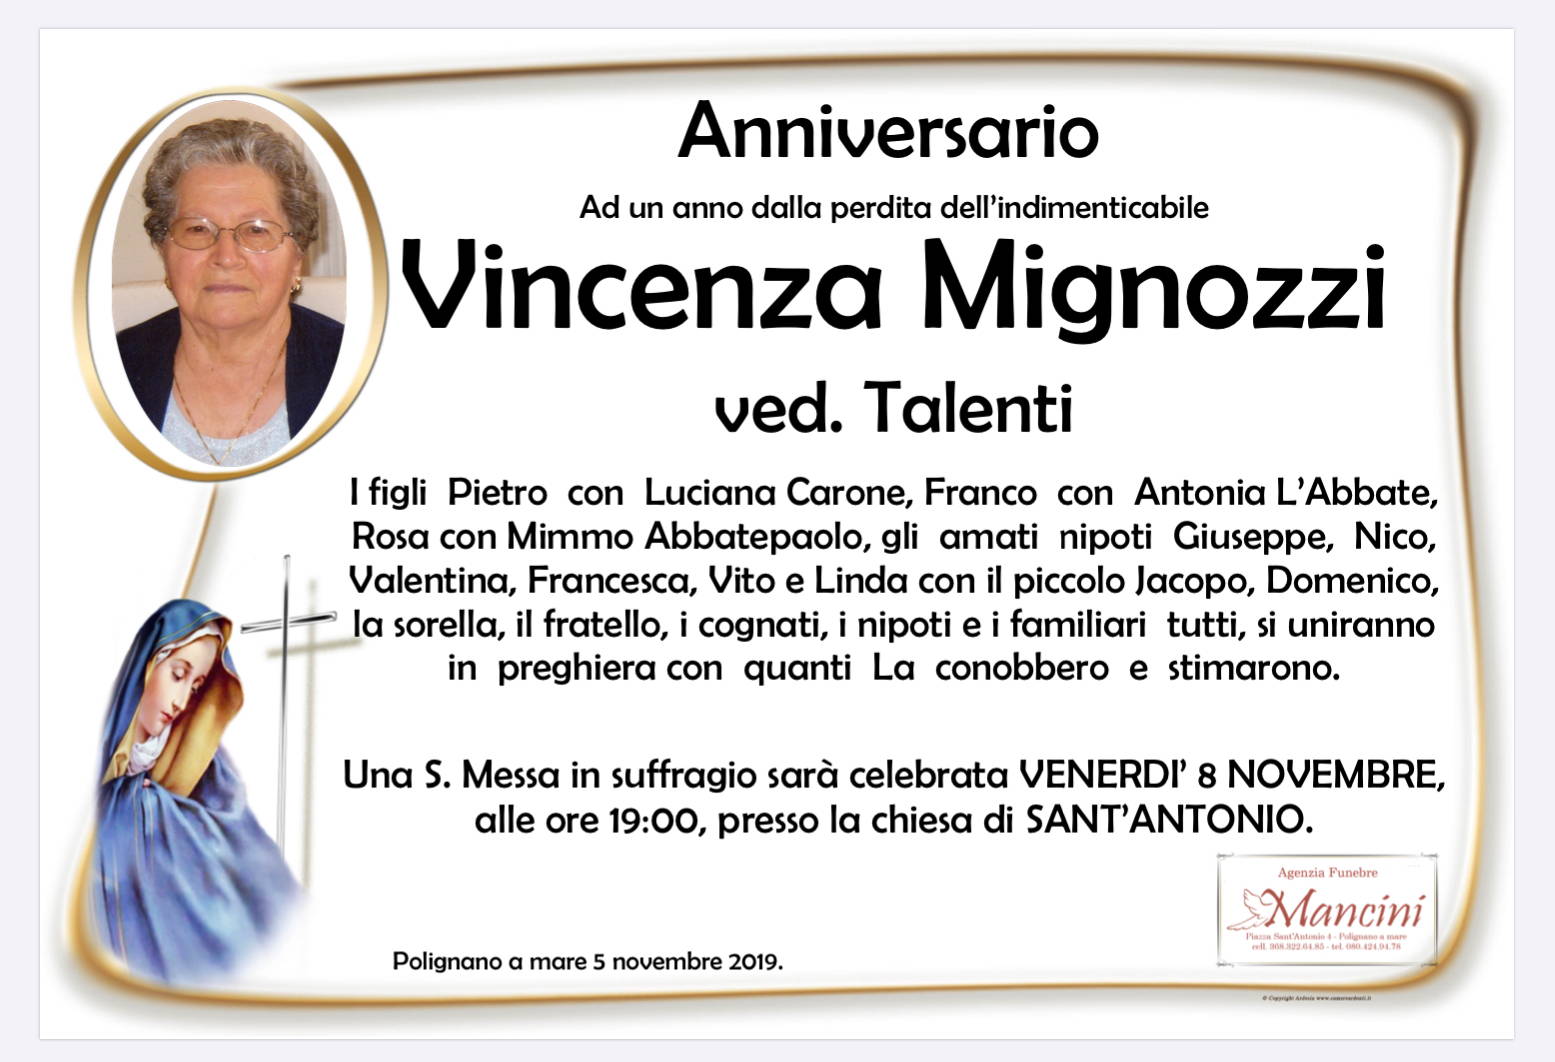 Vincenza Mignozzi